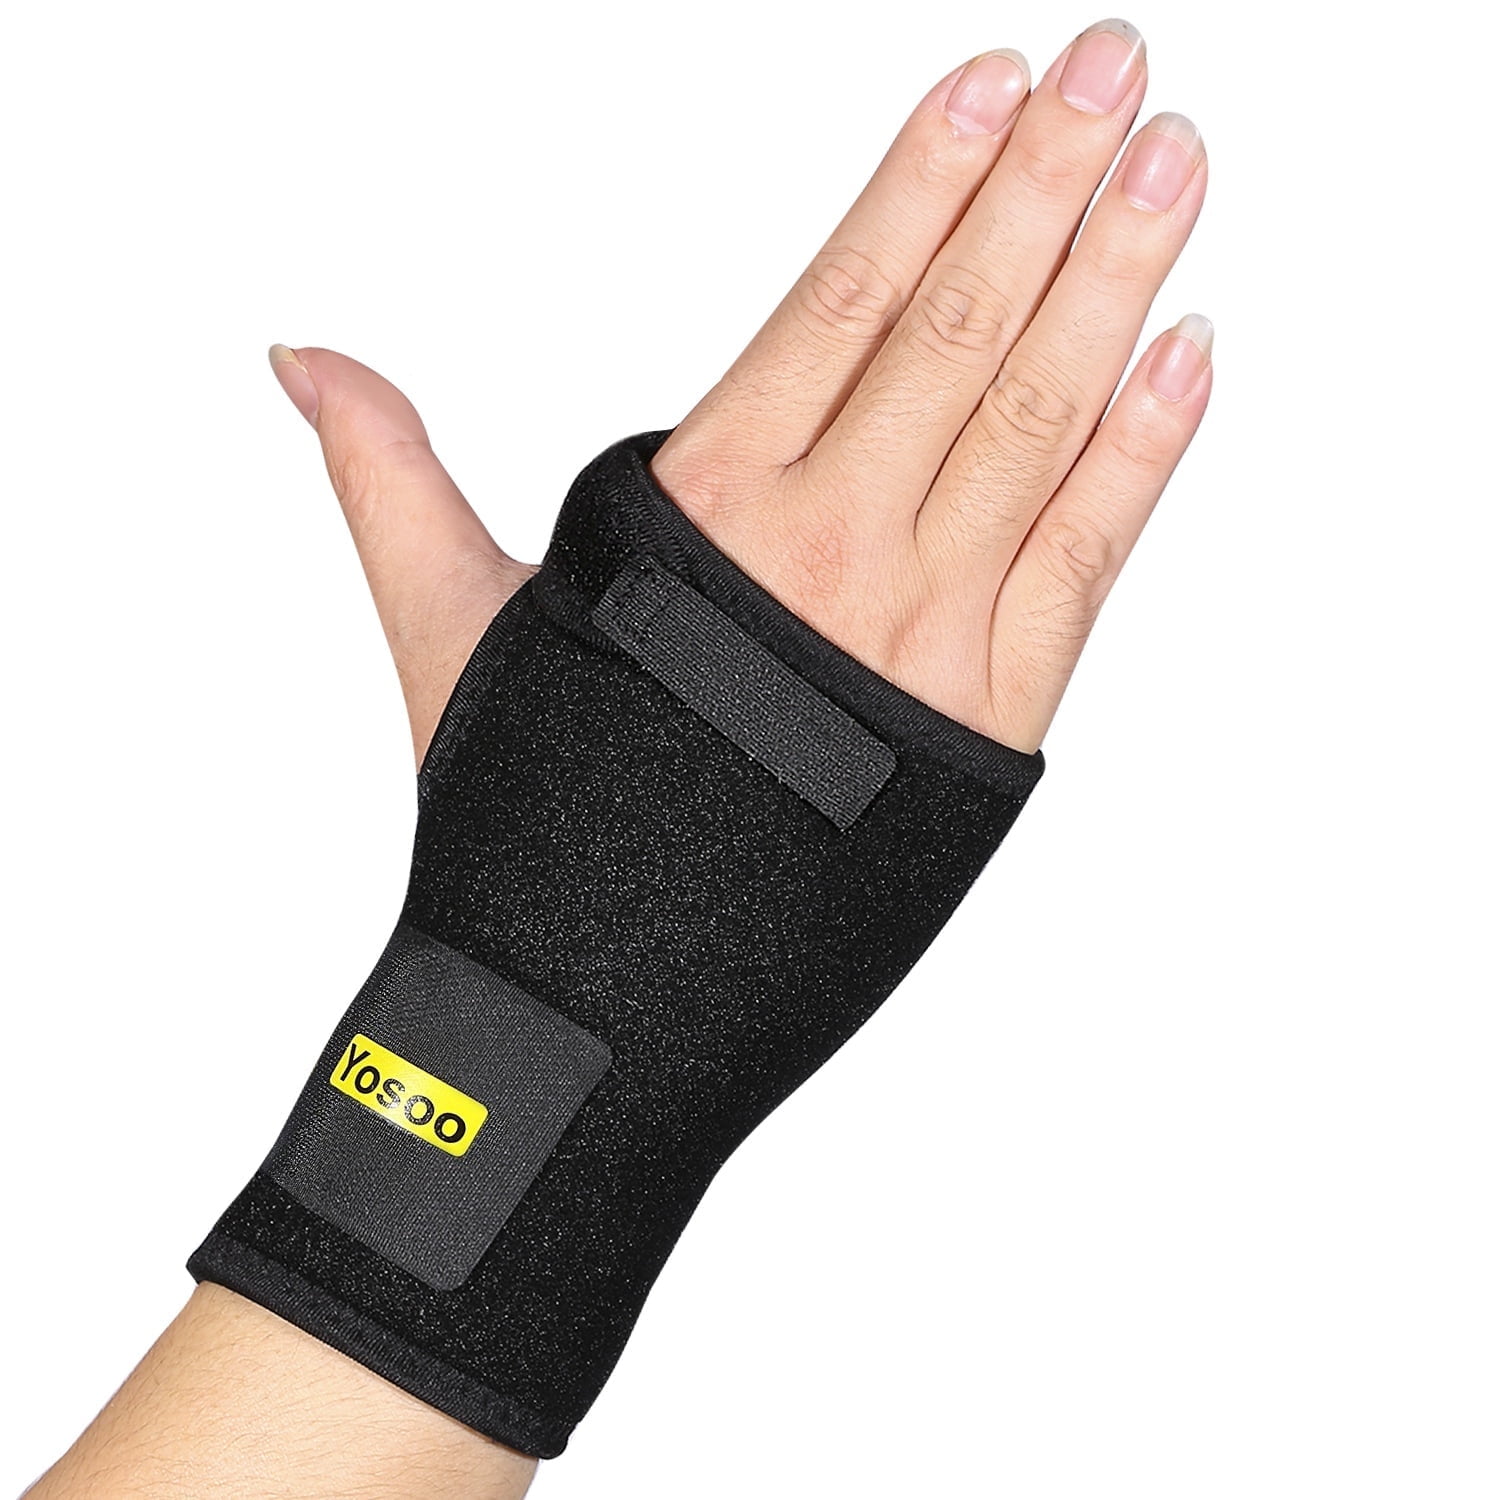 Wrist Brace for Carpal Tunnel Pain Relief, Wrist Support Splint